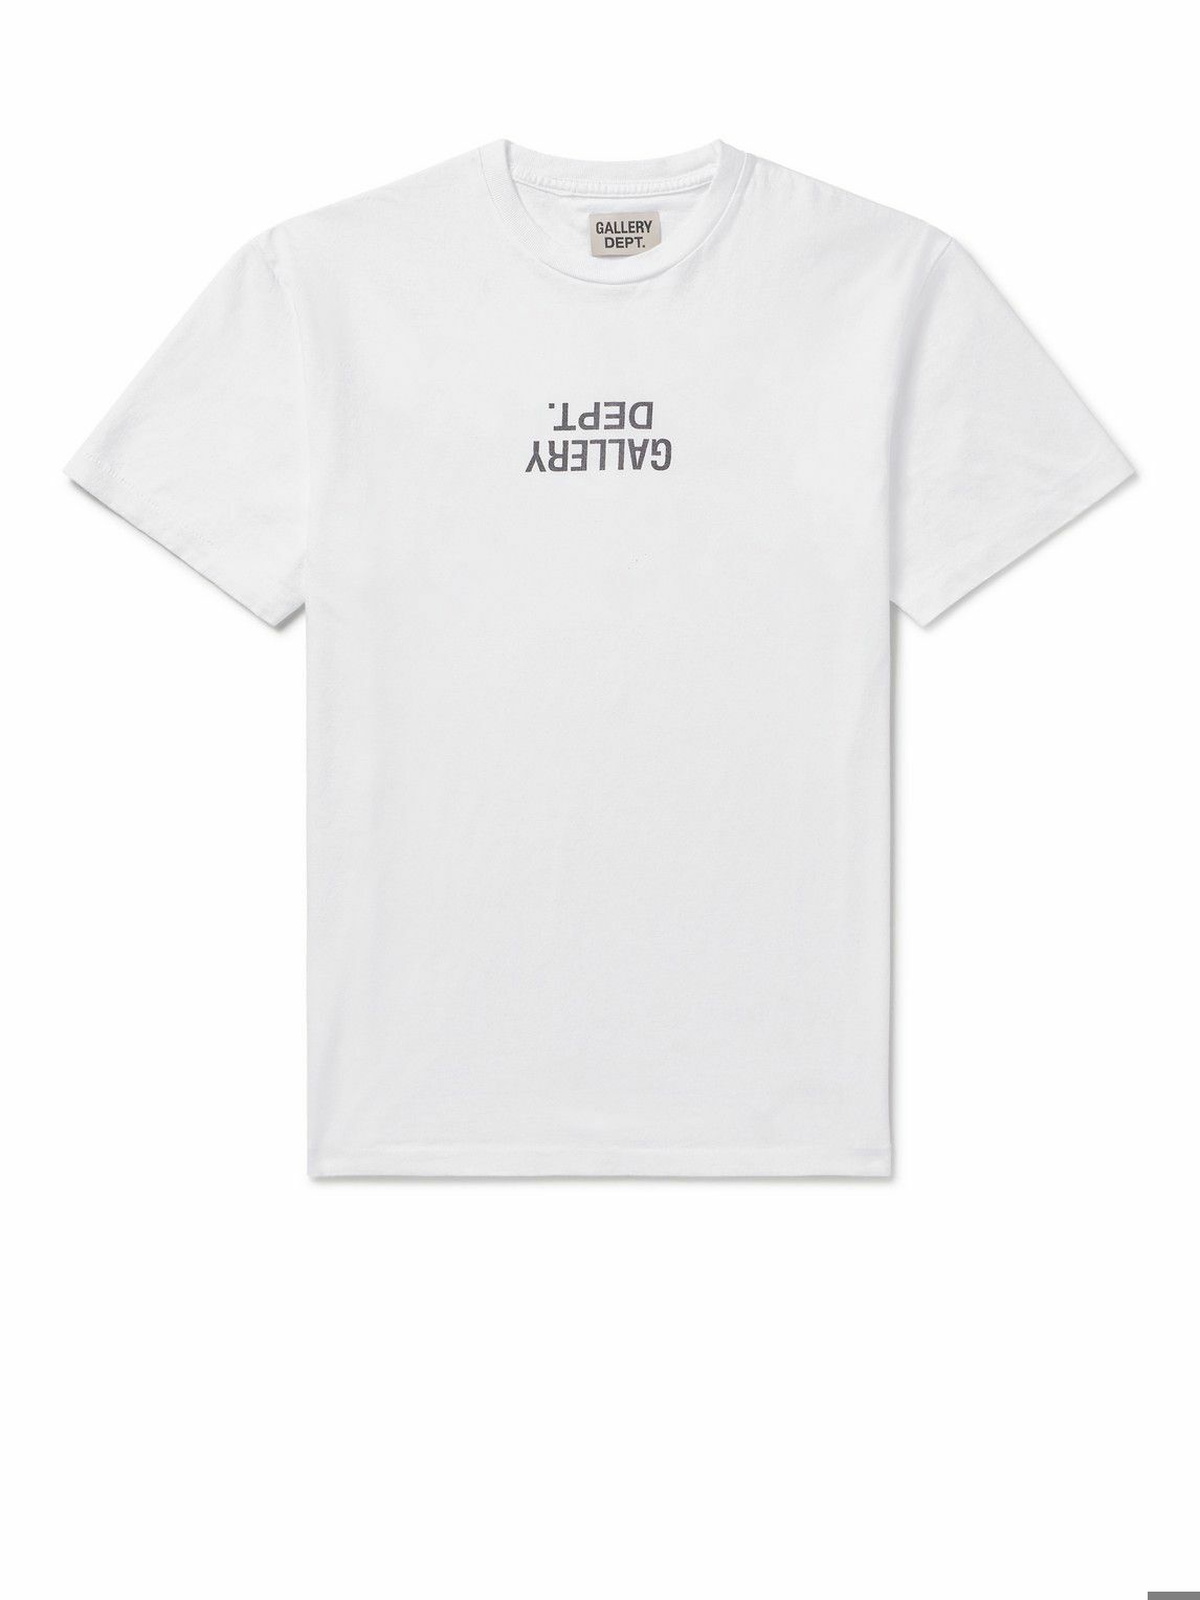 Gallery Dept. - Logo-Print Cotton-Jersey T-Shirt - White Gallery Dept.